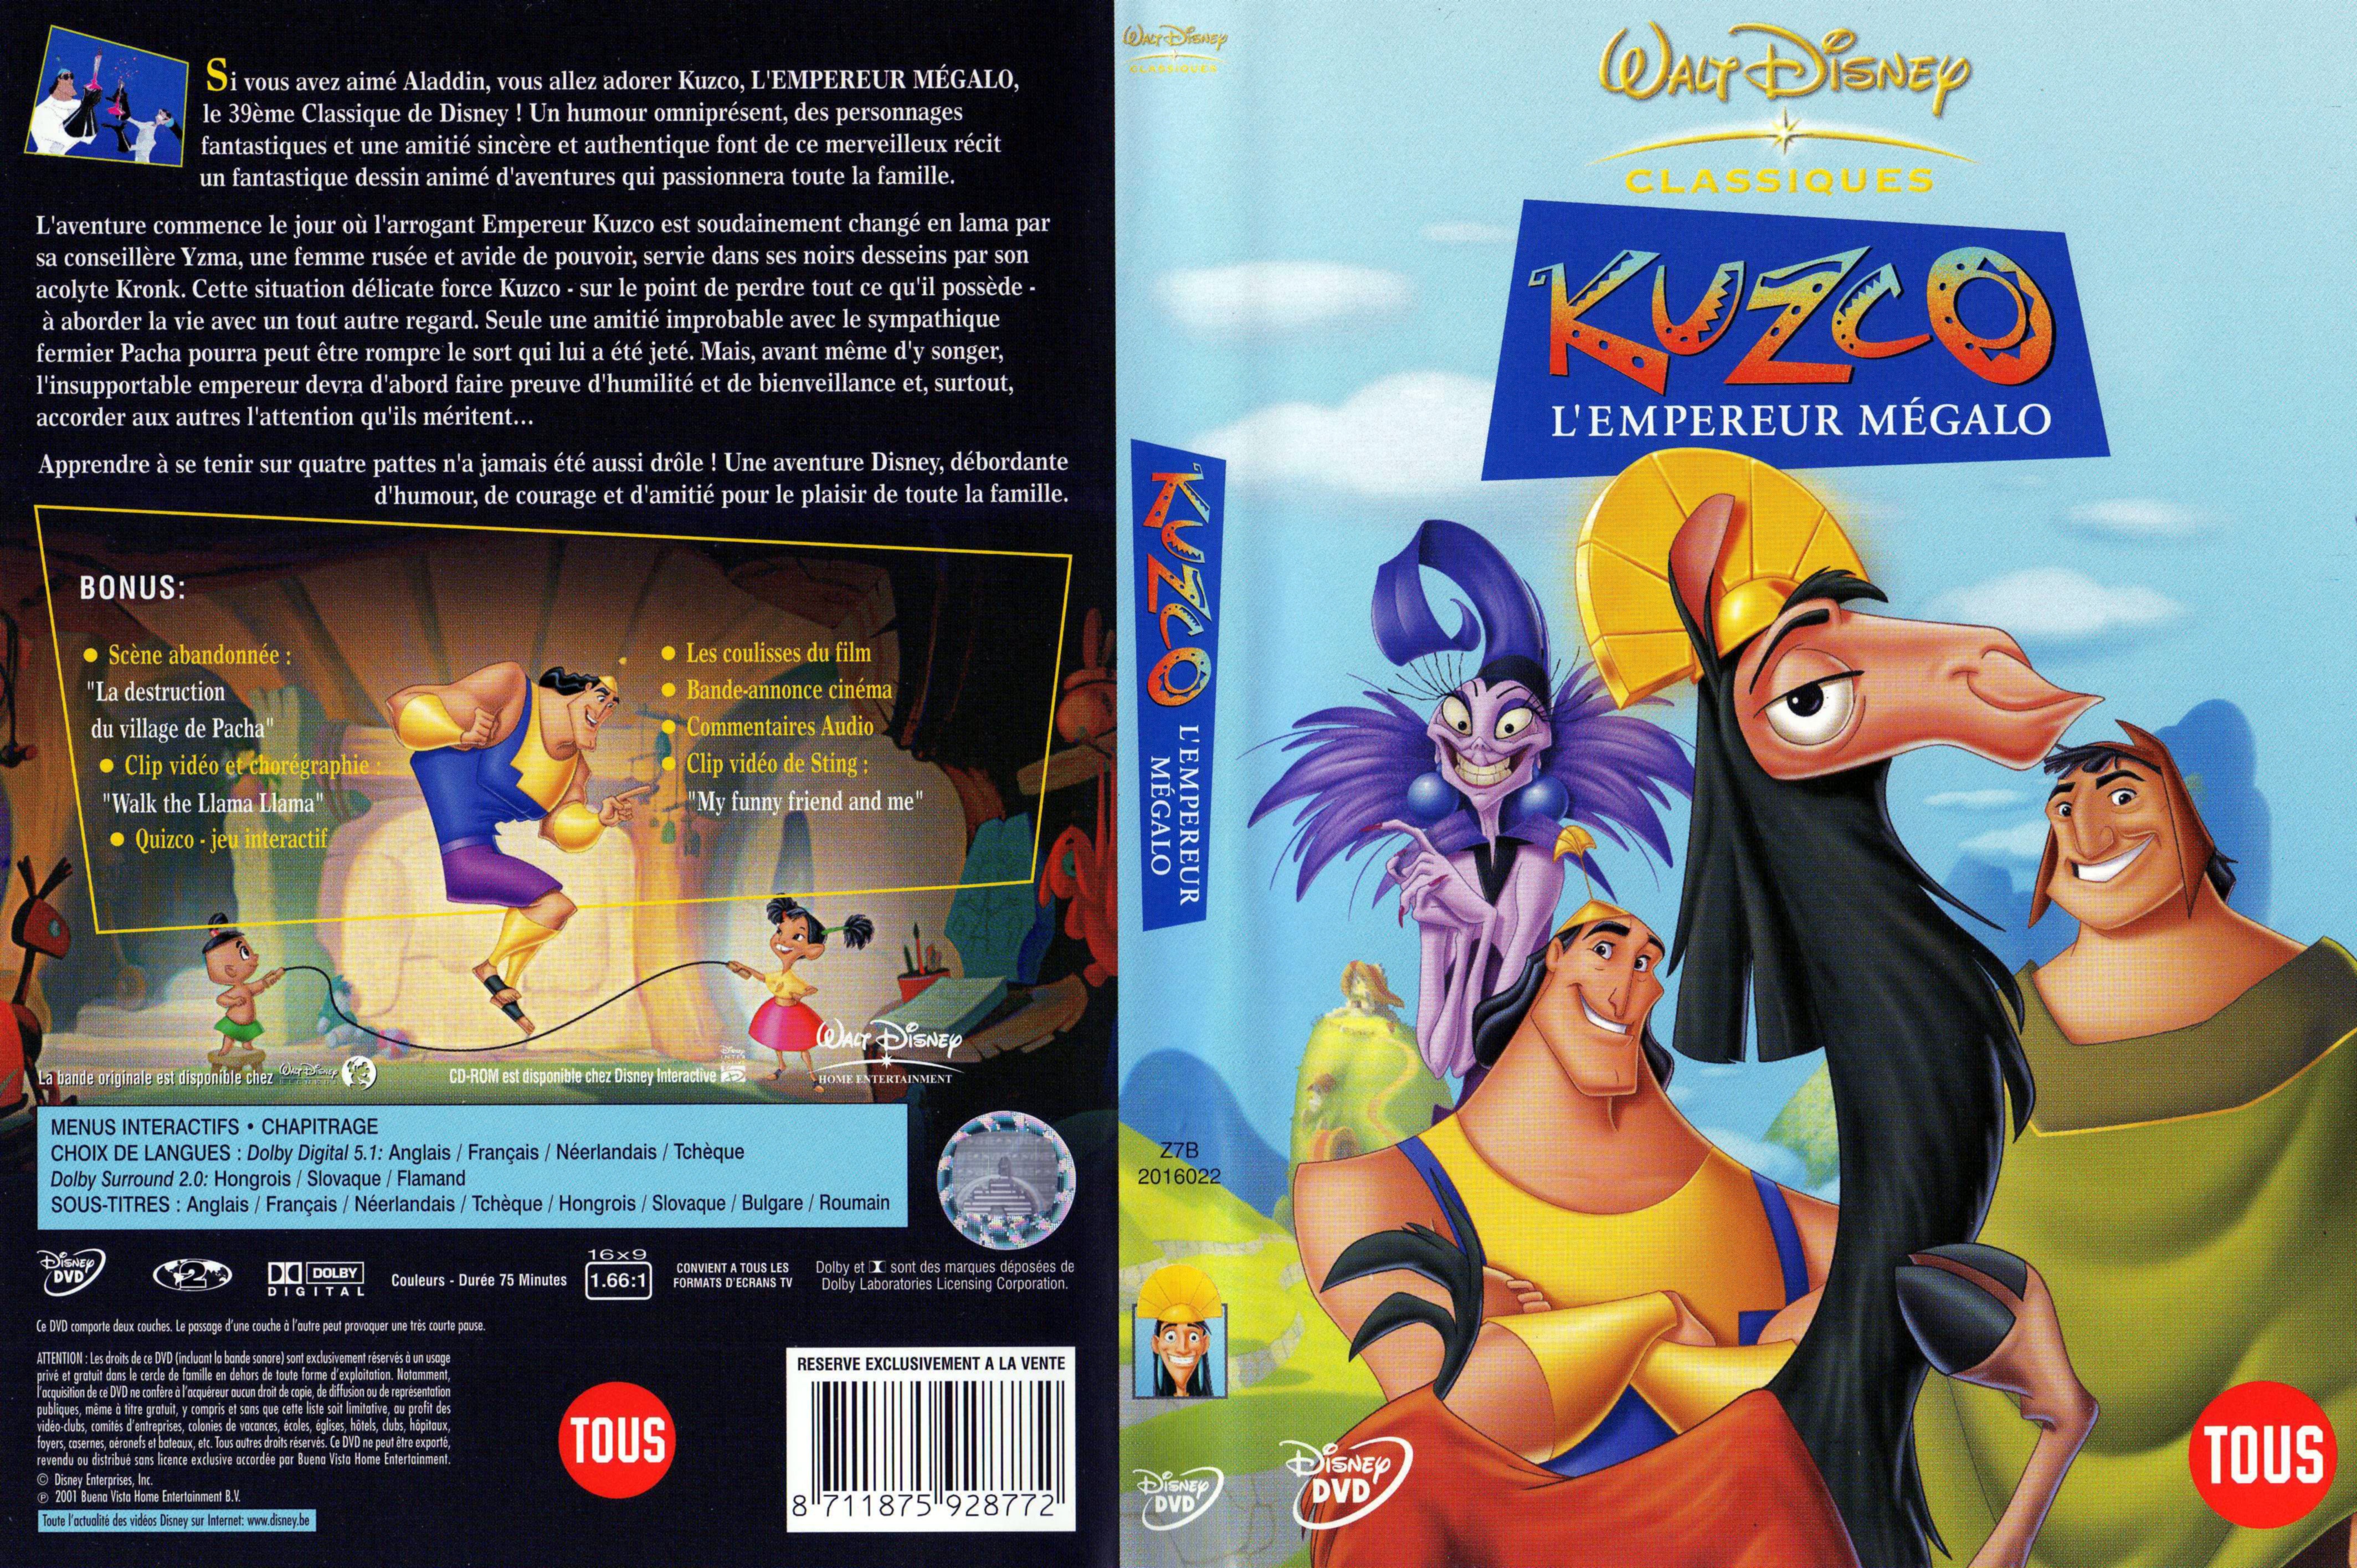 Jaquette DVD Kuzco v3